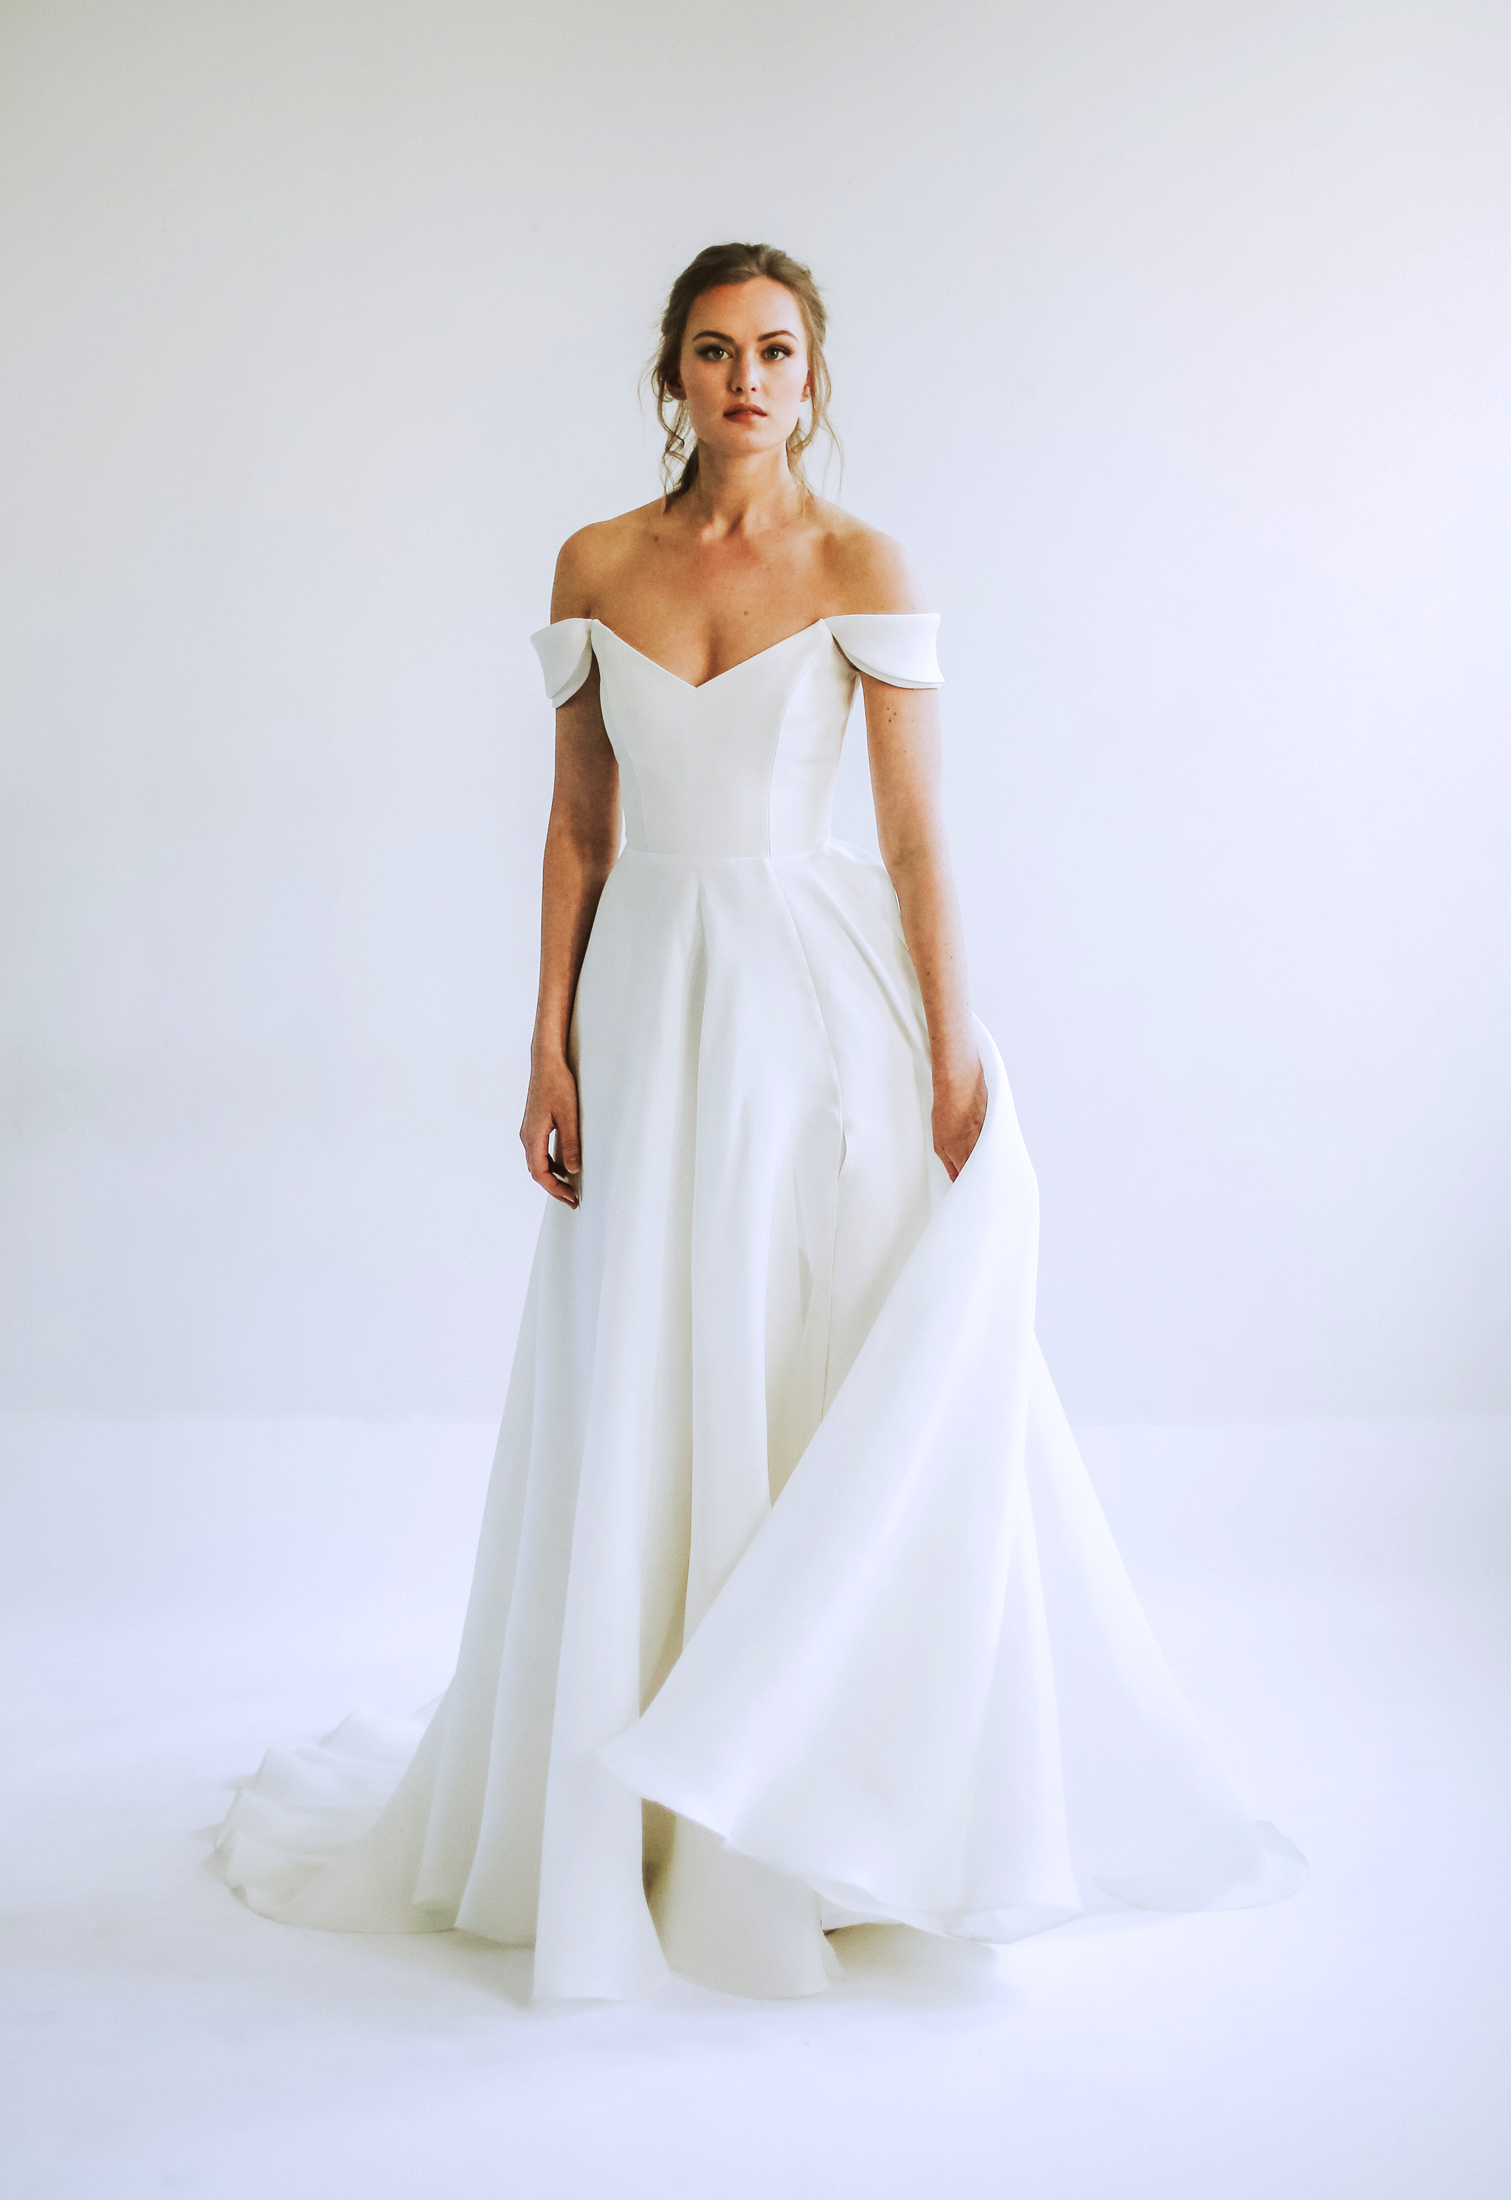 Simple Wedding Dresses That Are Just Plain Chic | Martha Stewart Weddings